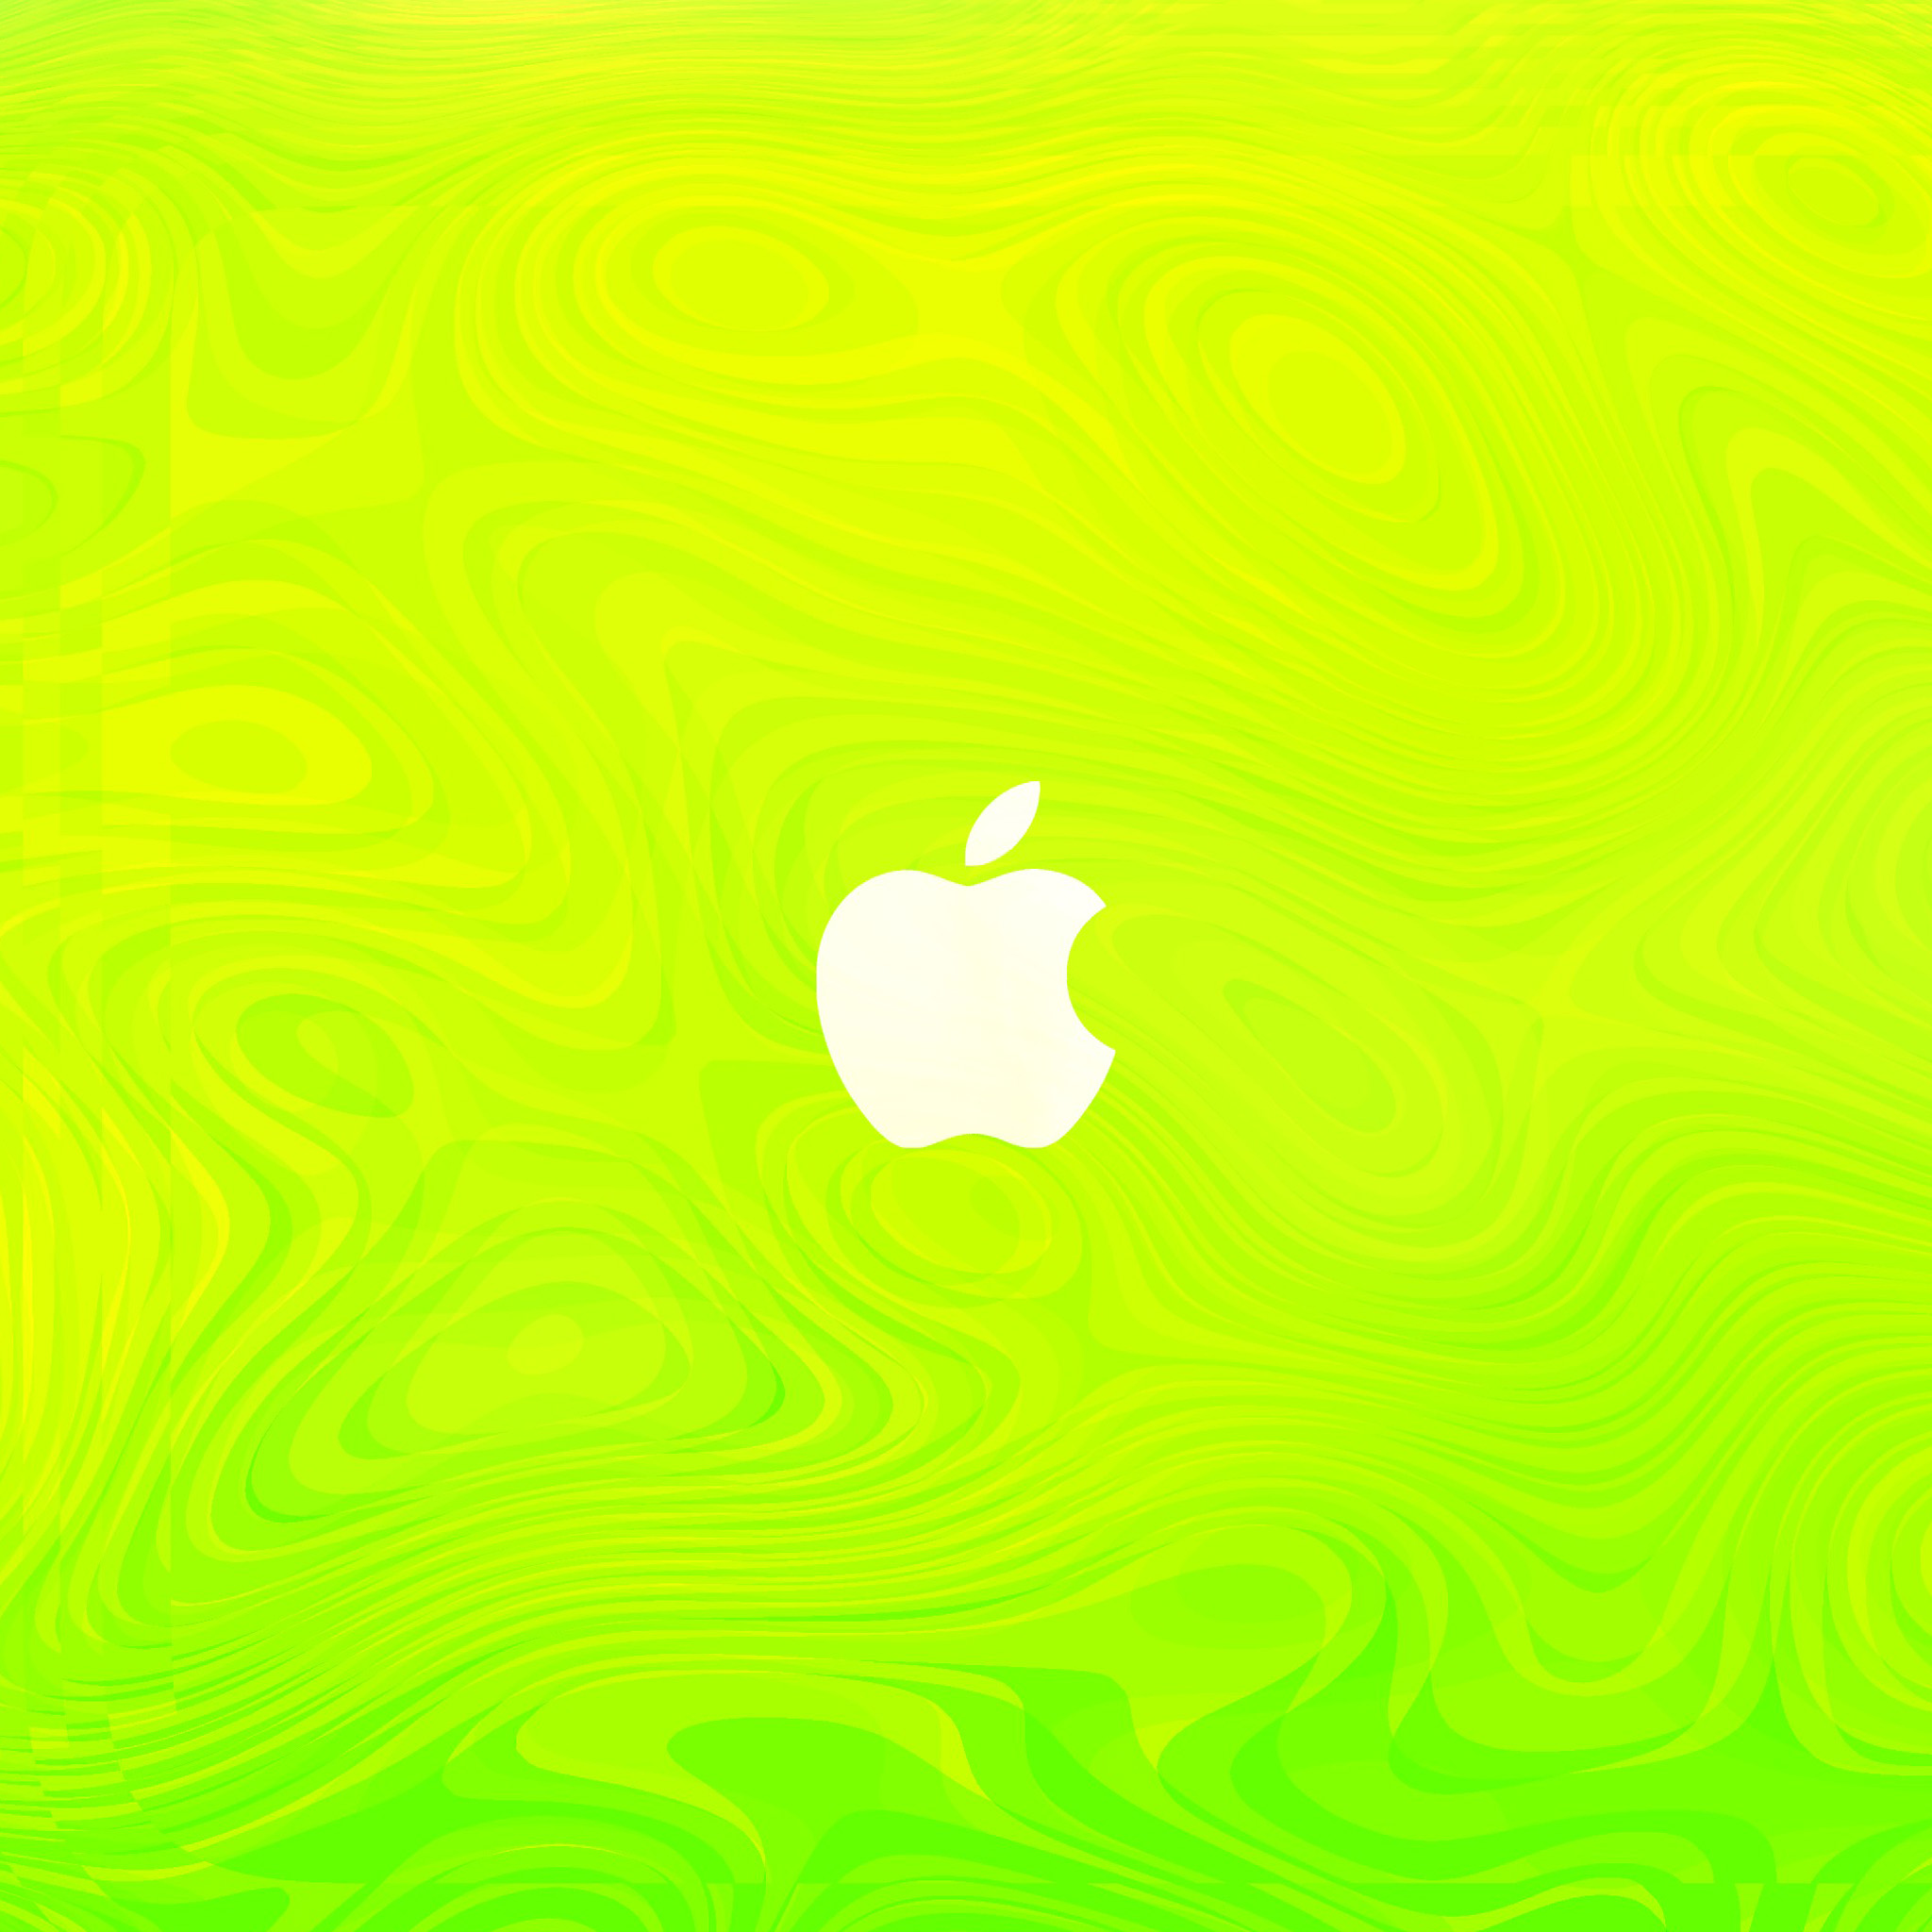 Apple iPad Air Wallpaper